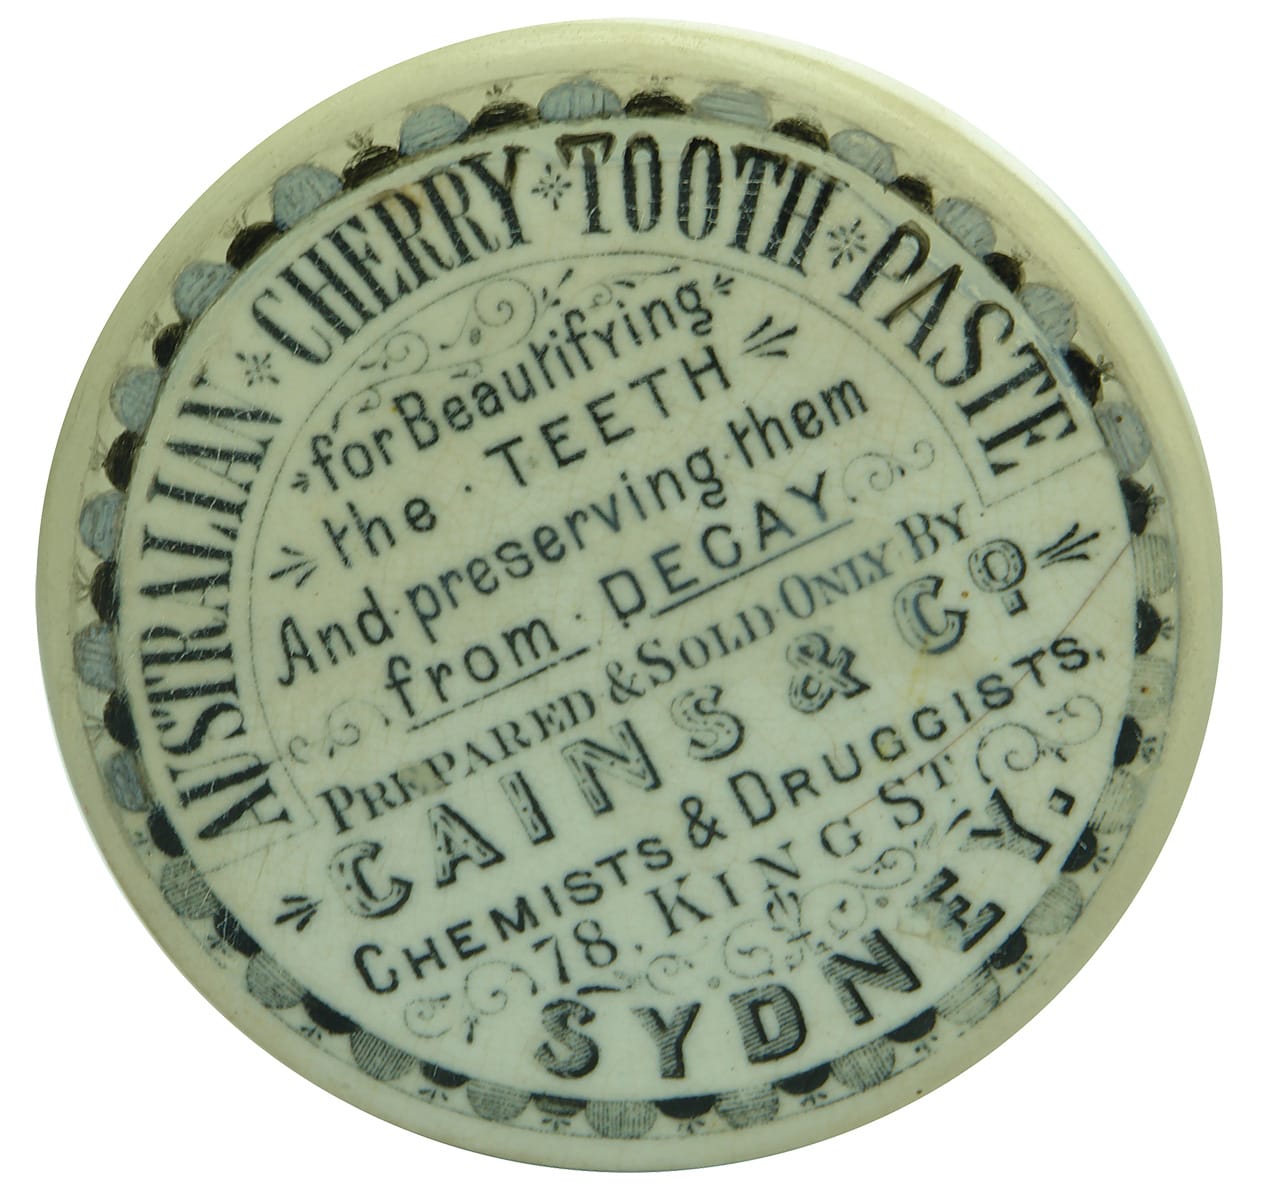 Cains Sydney Tooth Paste Pot Lid